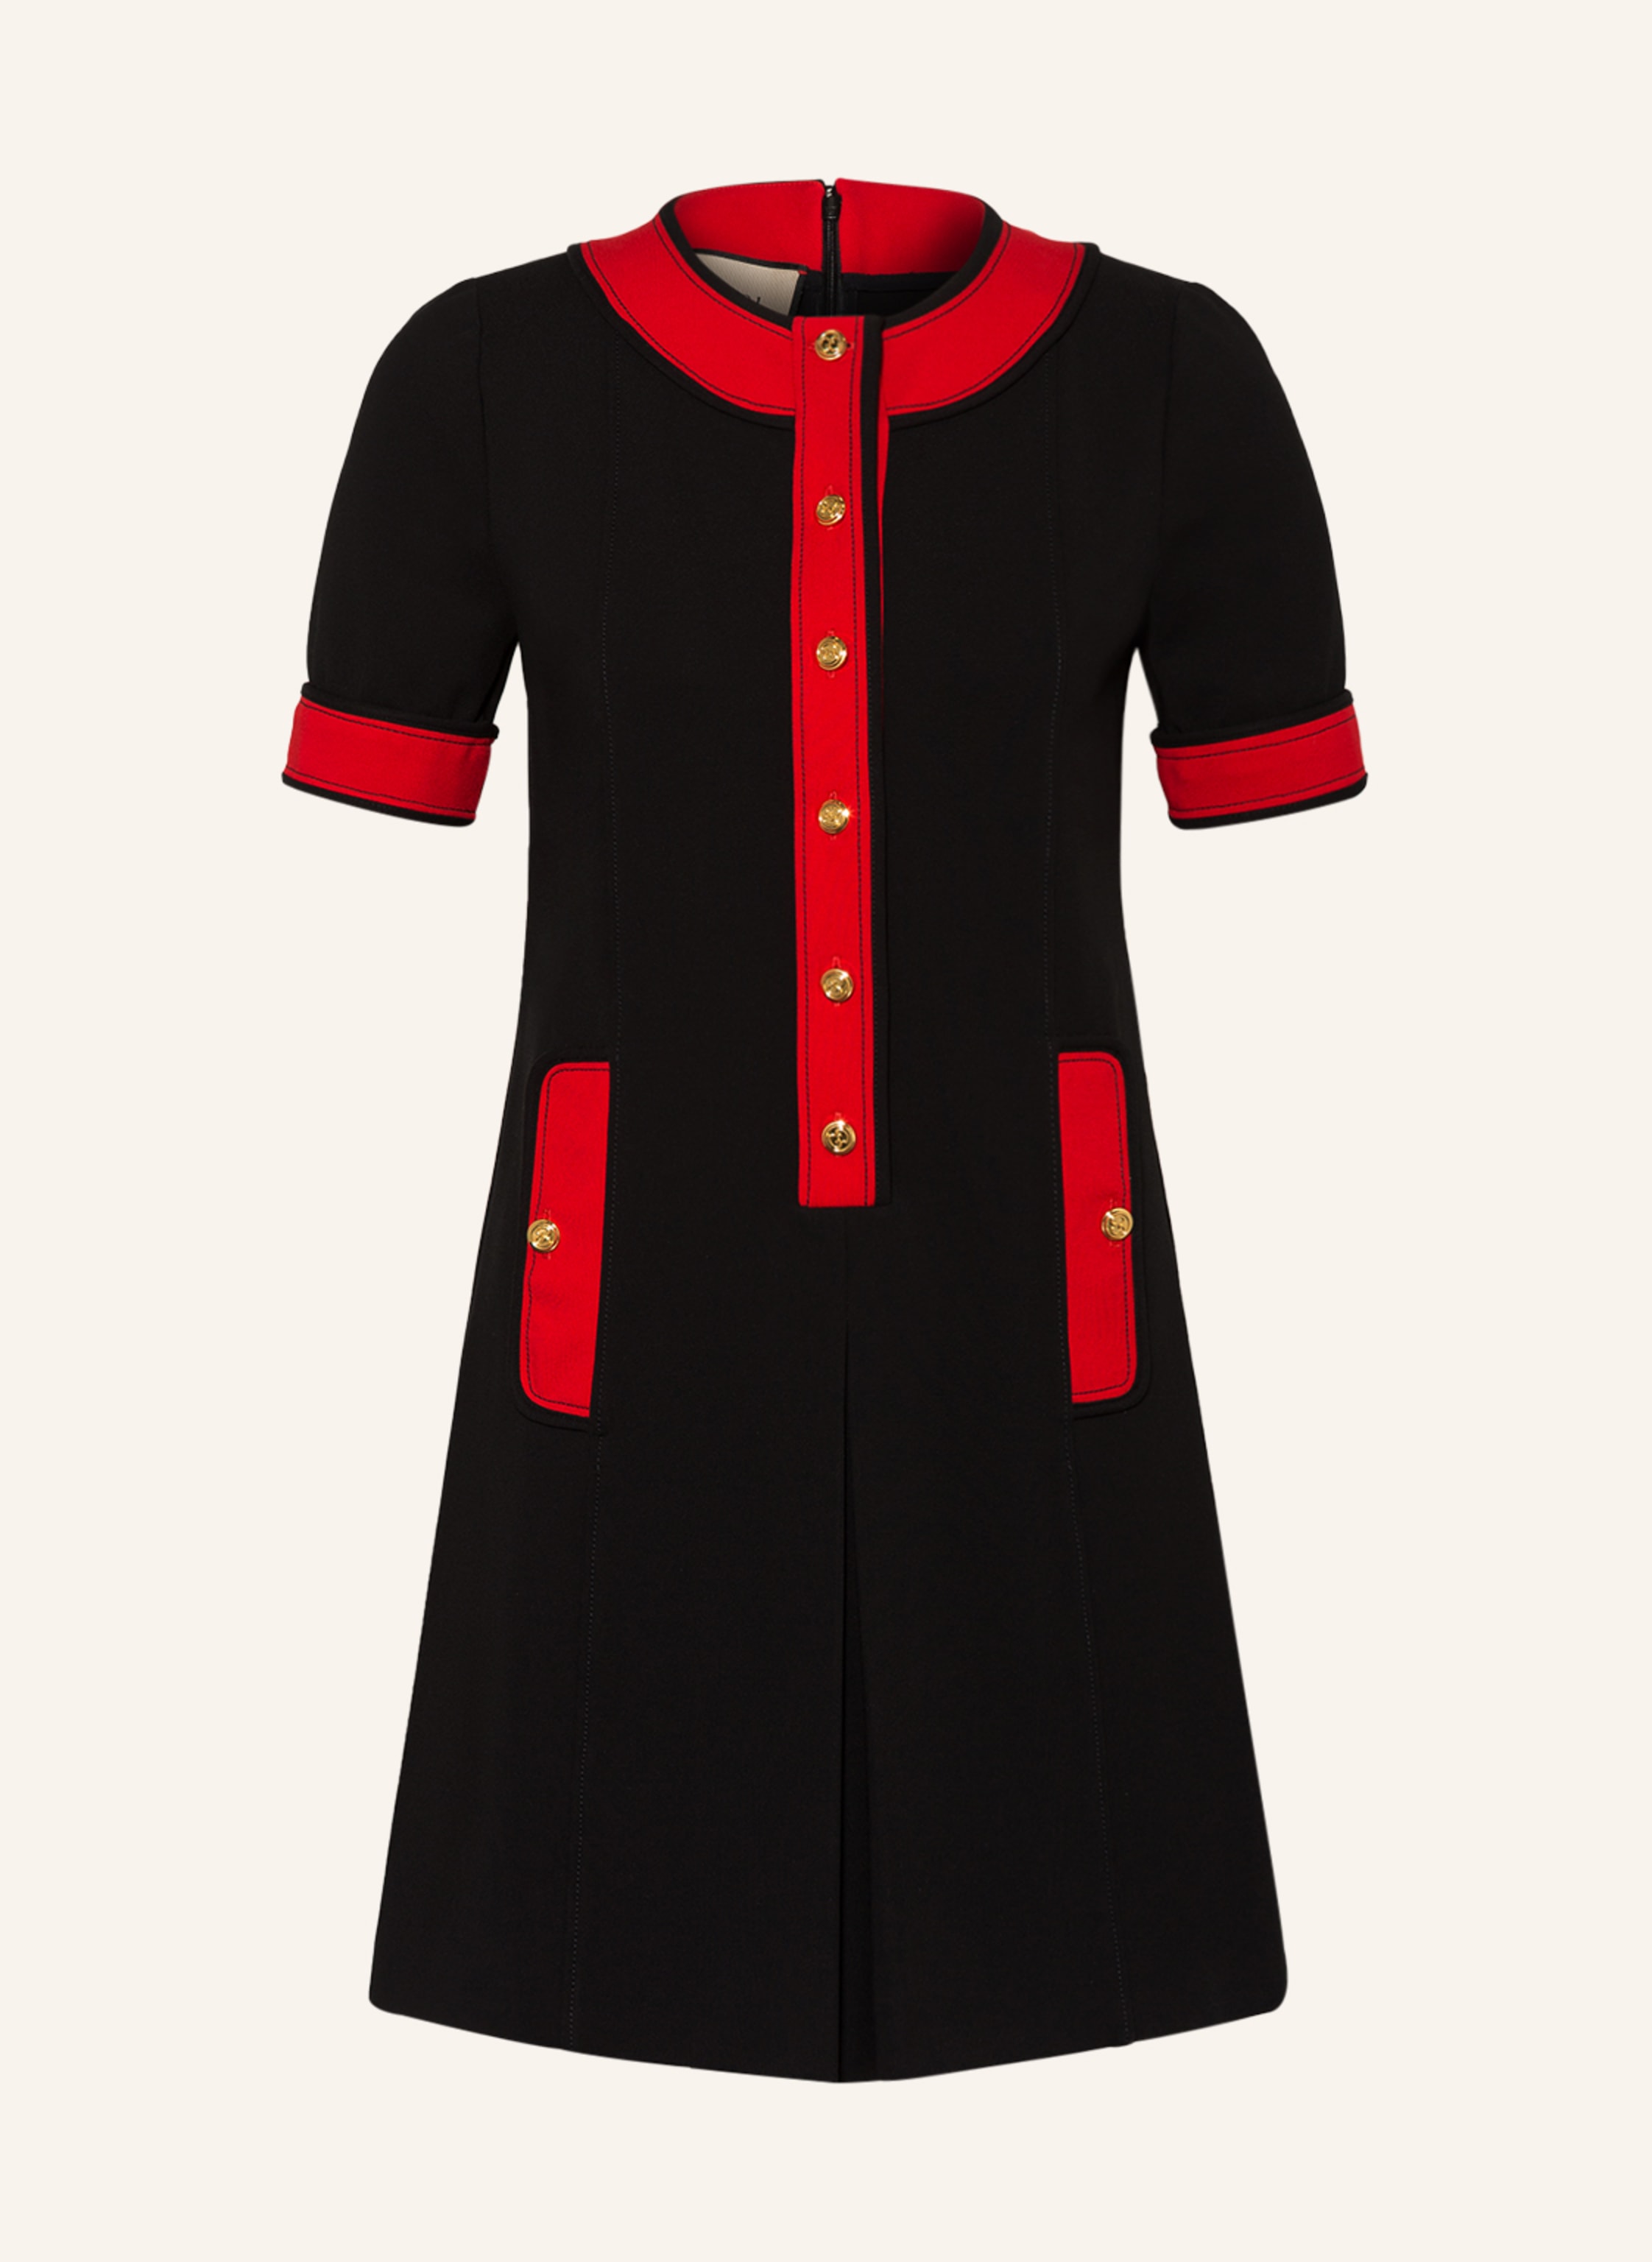 GUCCI Dress in black/ red